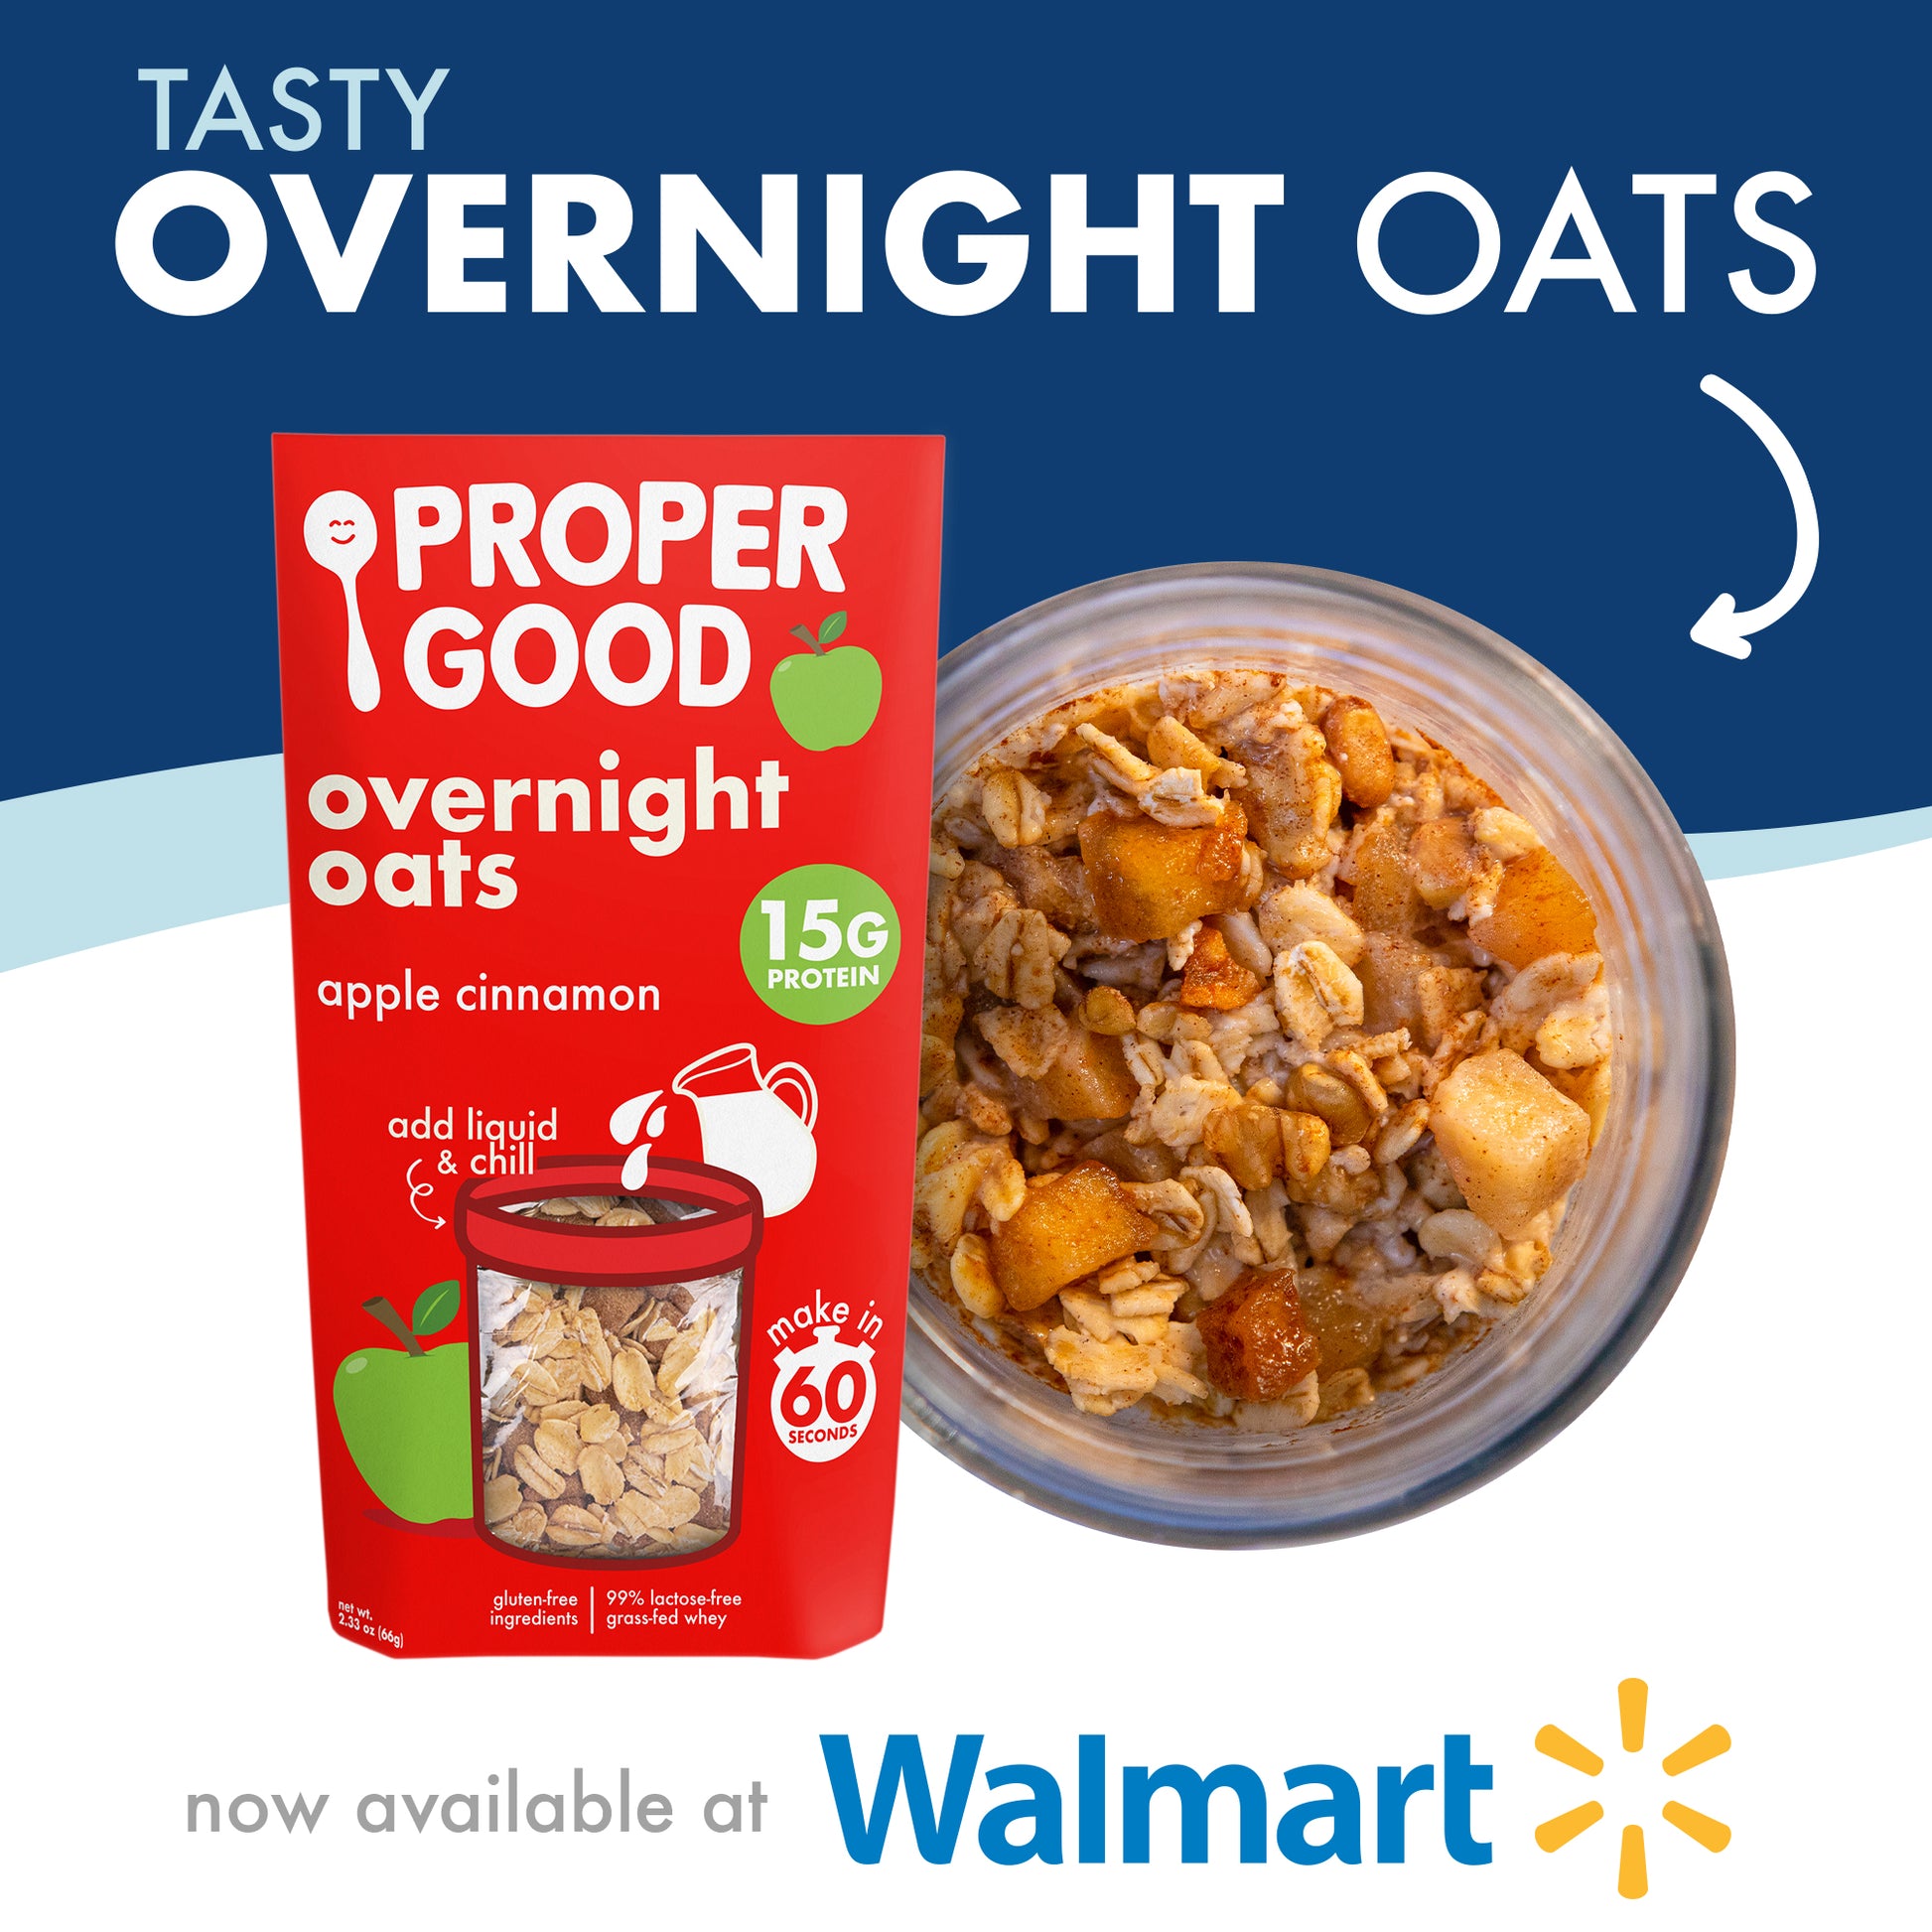 Apple Cinnamon Protein Overnight Oats Available in Walmart - Proper Good